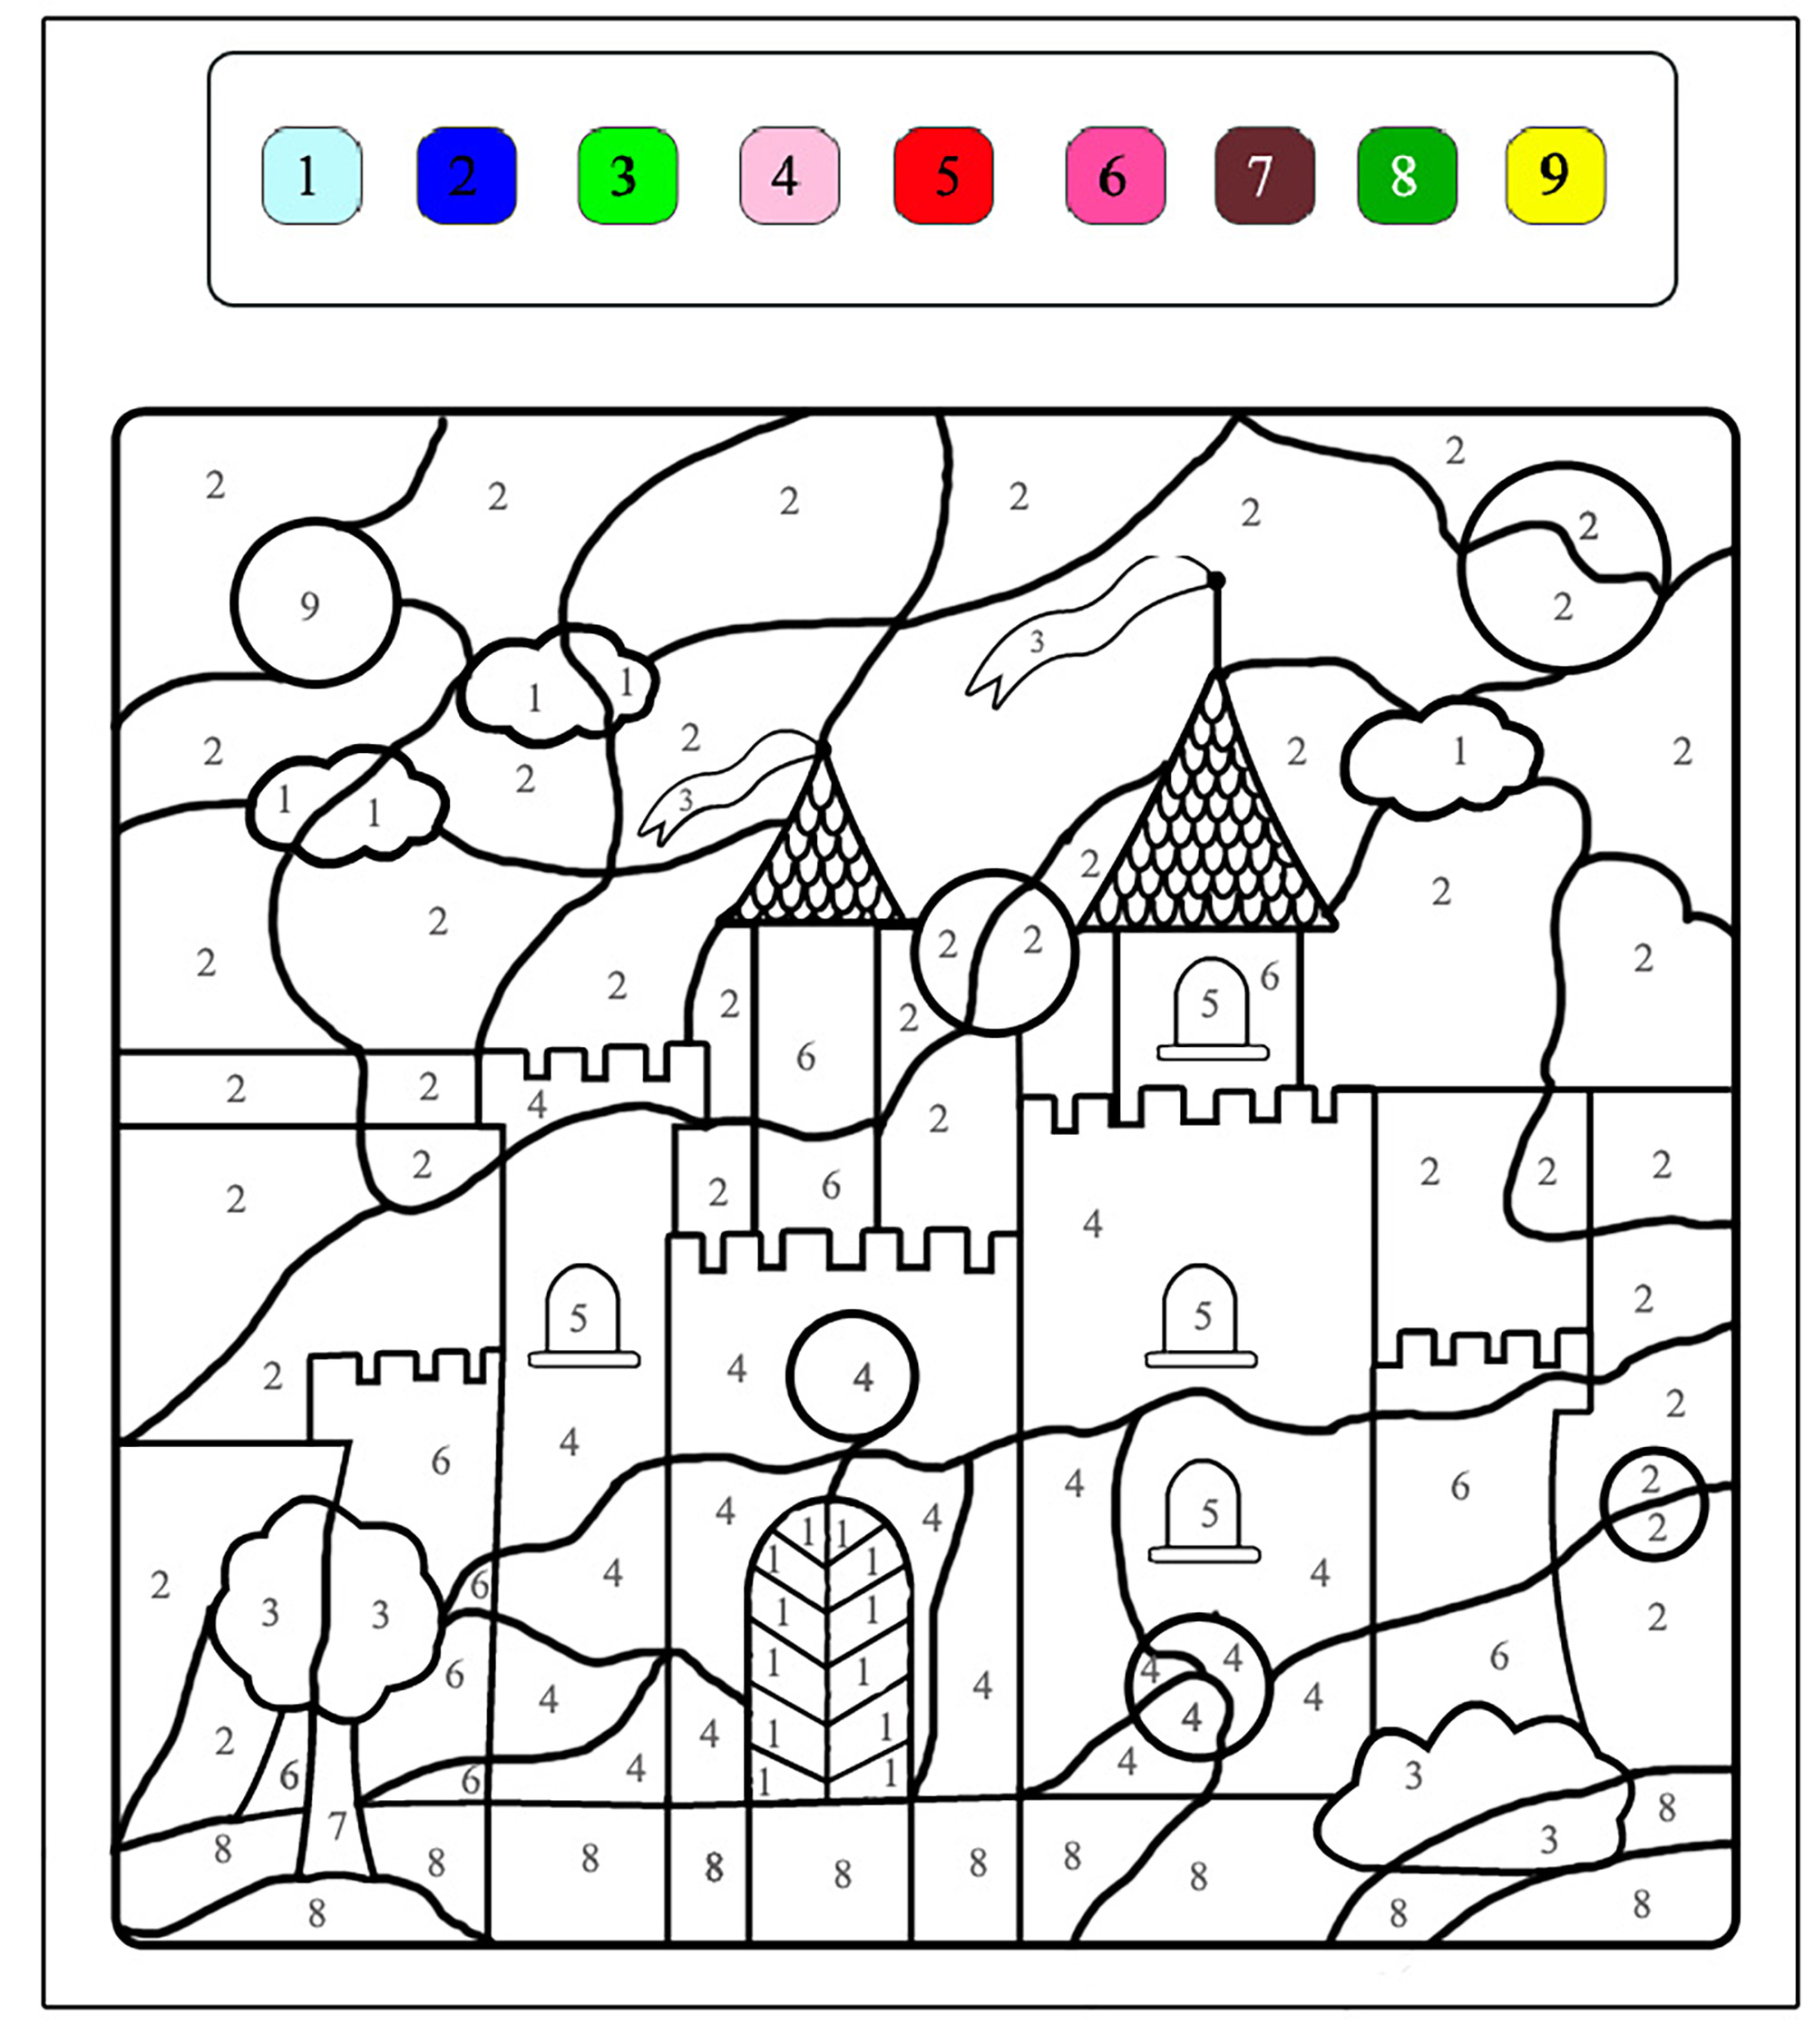 Bonito castelo para colorir com nove cores